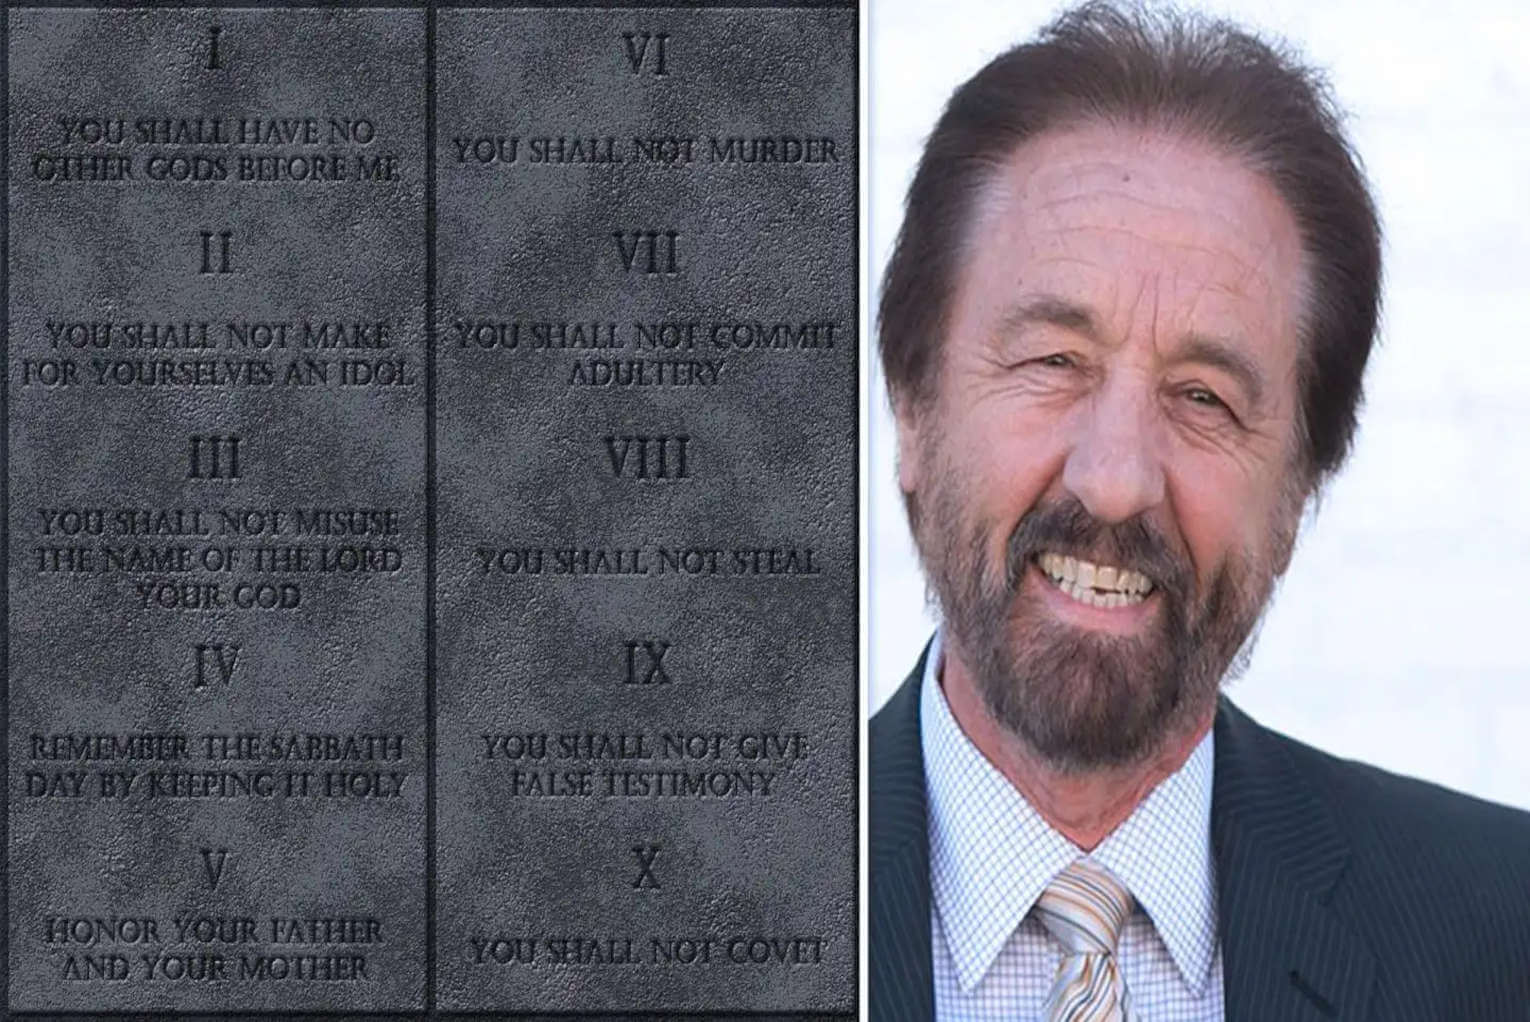 ACLU Sues Over Ten Commandments: Ray Comfort’s Surprising Reaction